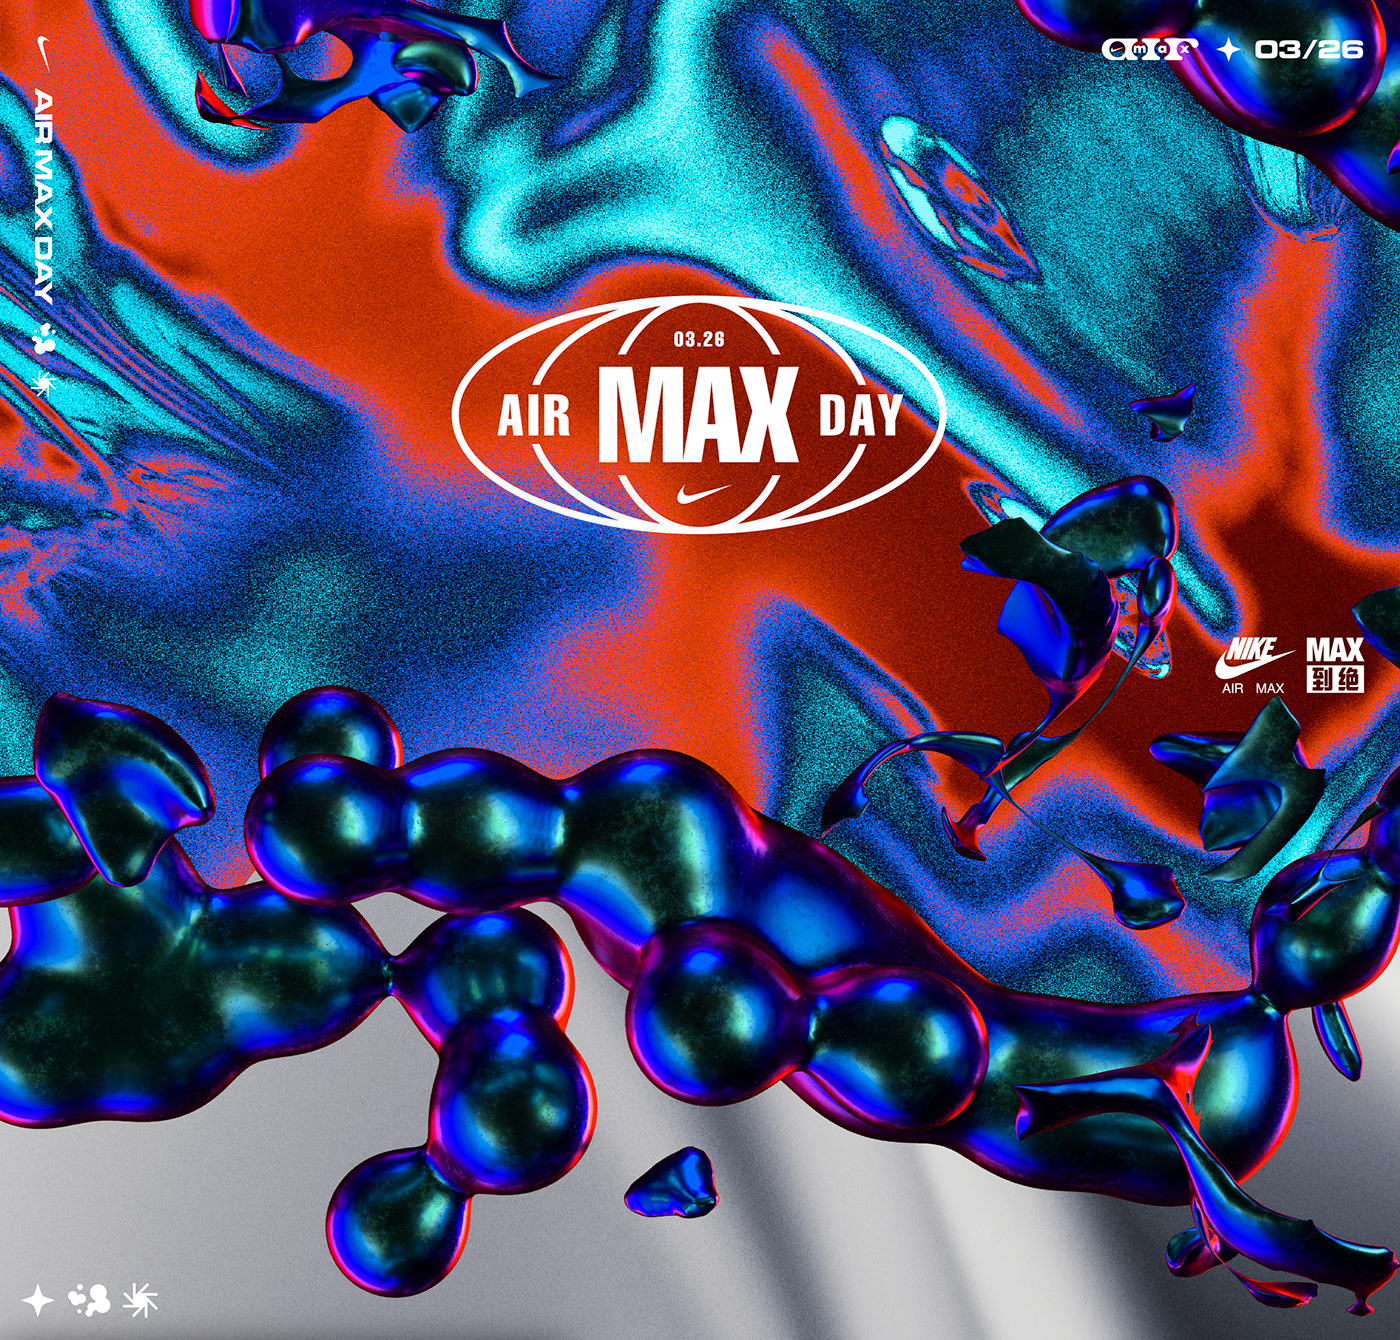 AMD AirMaxDay airmax Nike maximalism Nike China